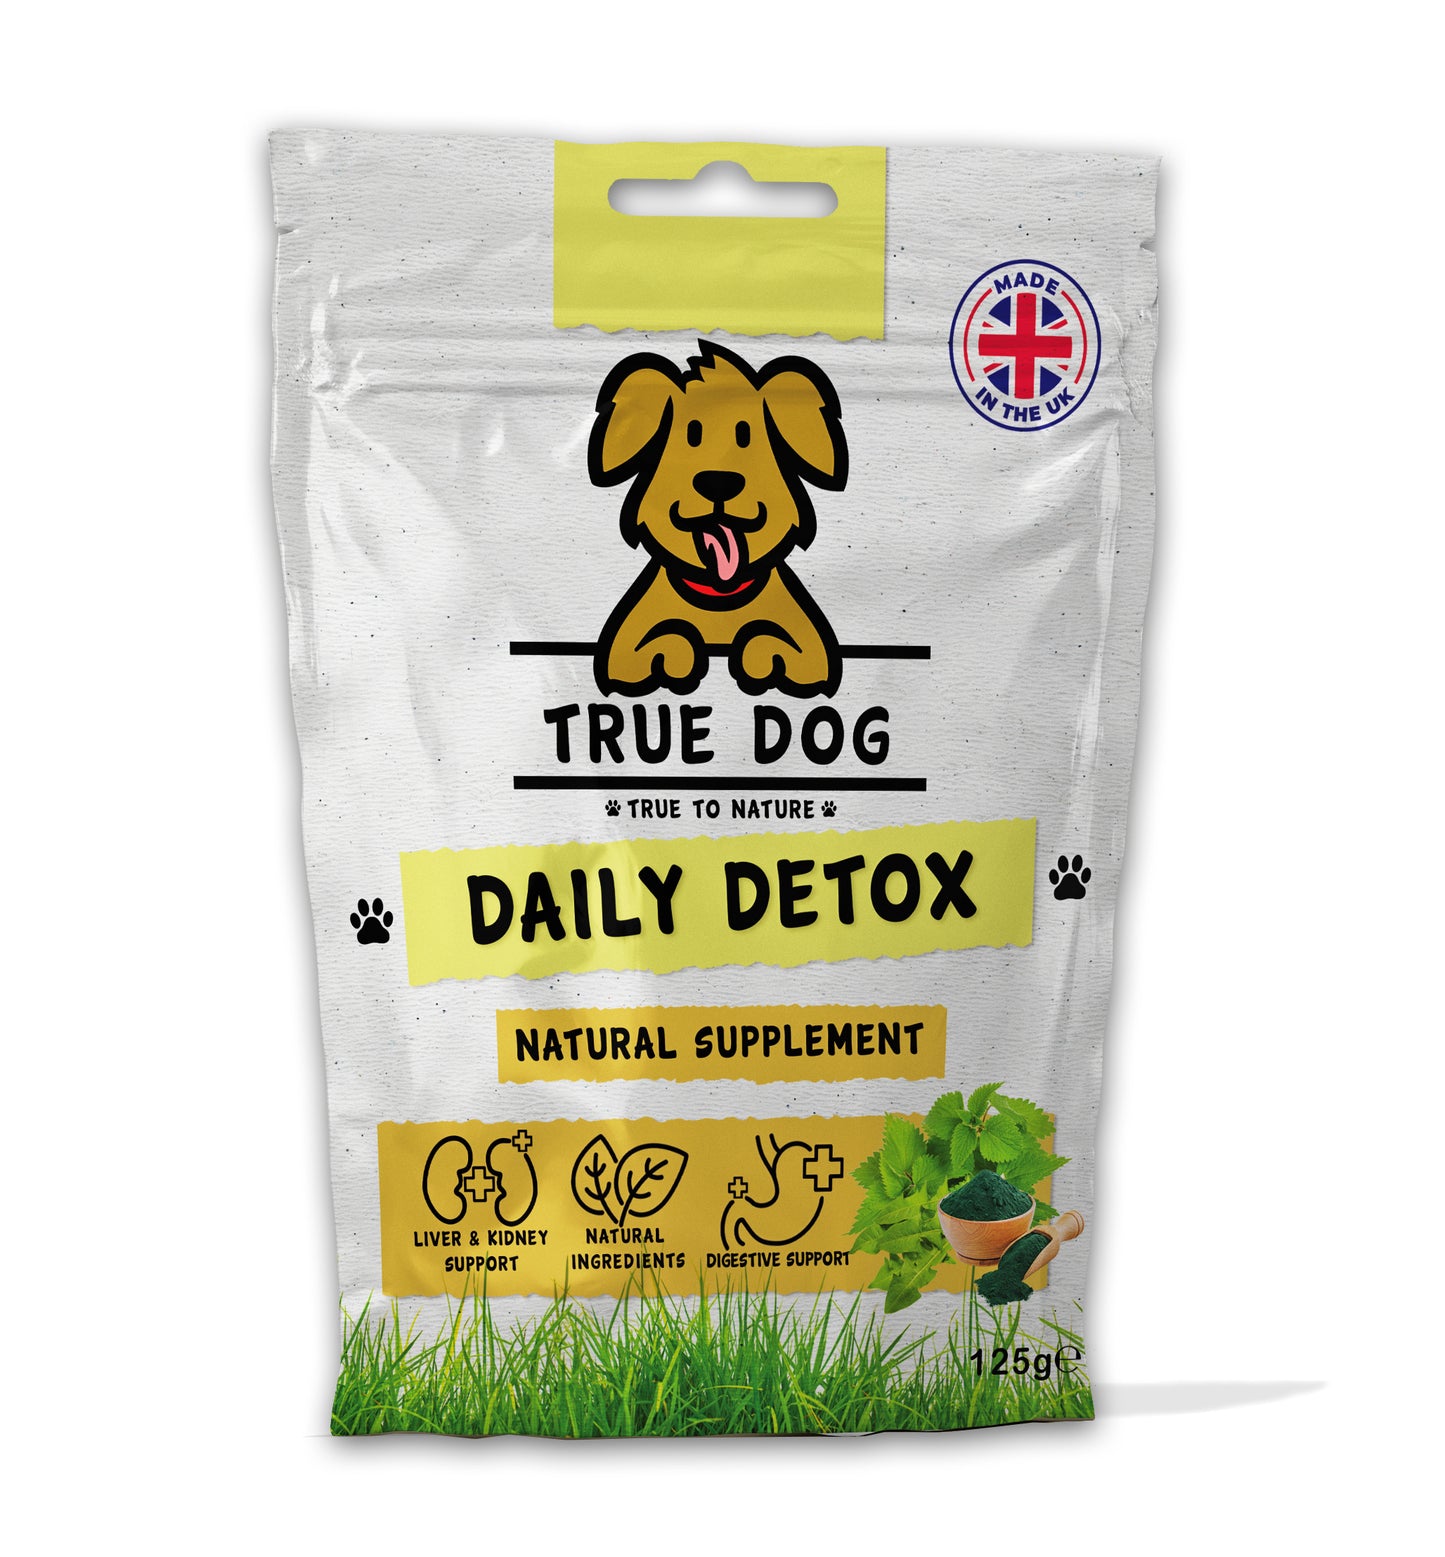 Natural Supplement - Daily Detox